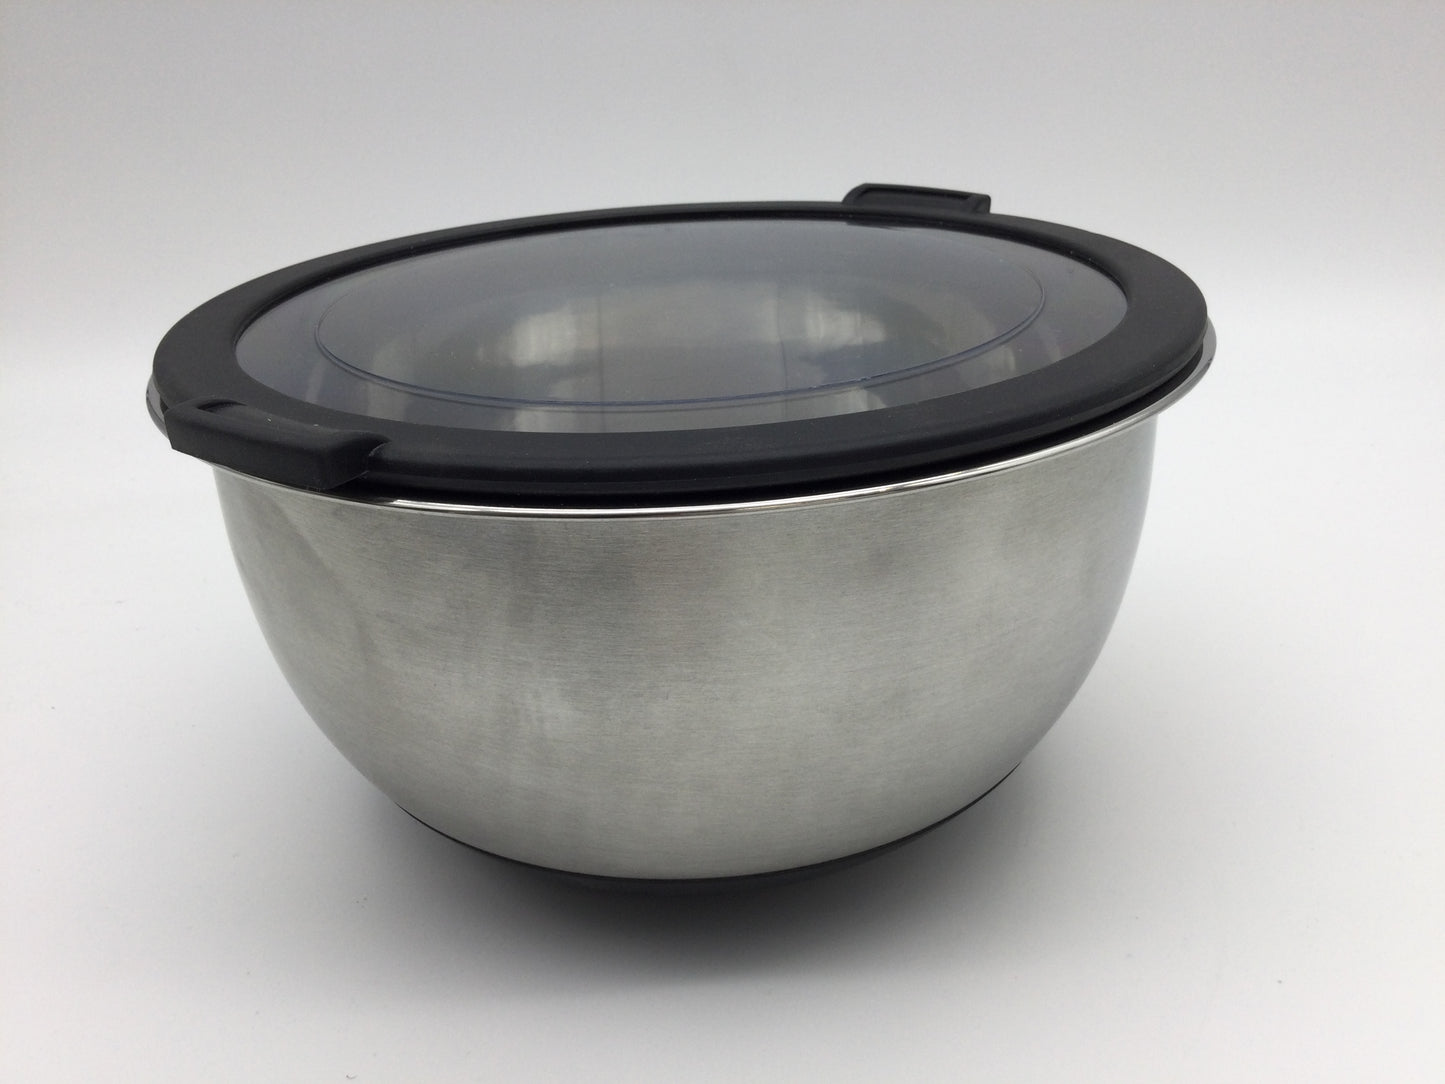 Kitchen Basics Stainless Steel Anti-Skid Mixing Bowl - 3 L